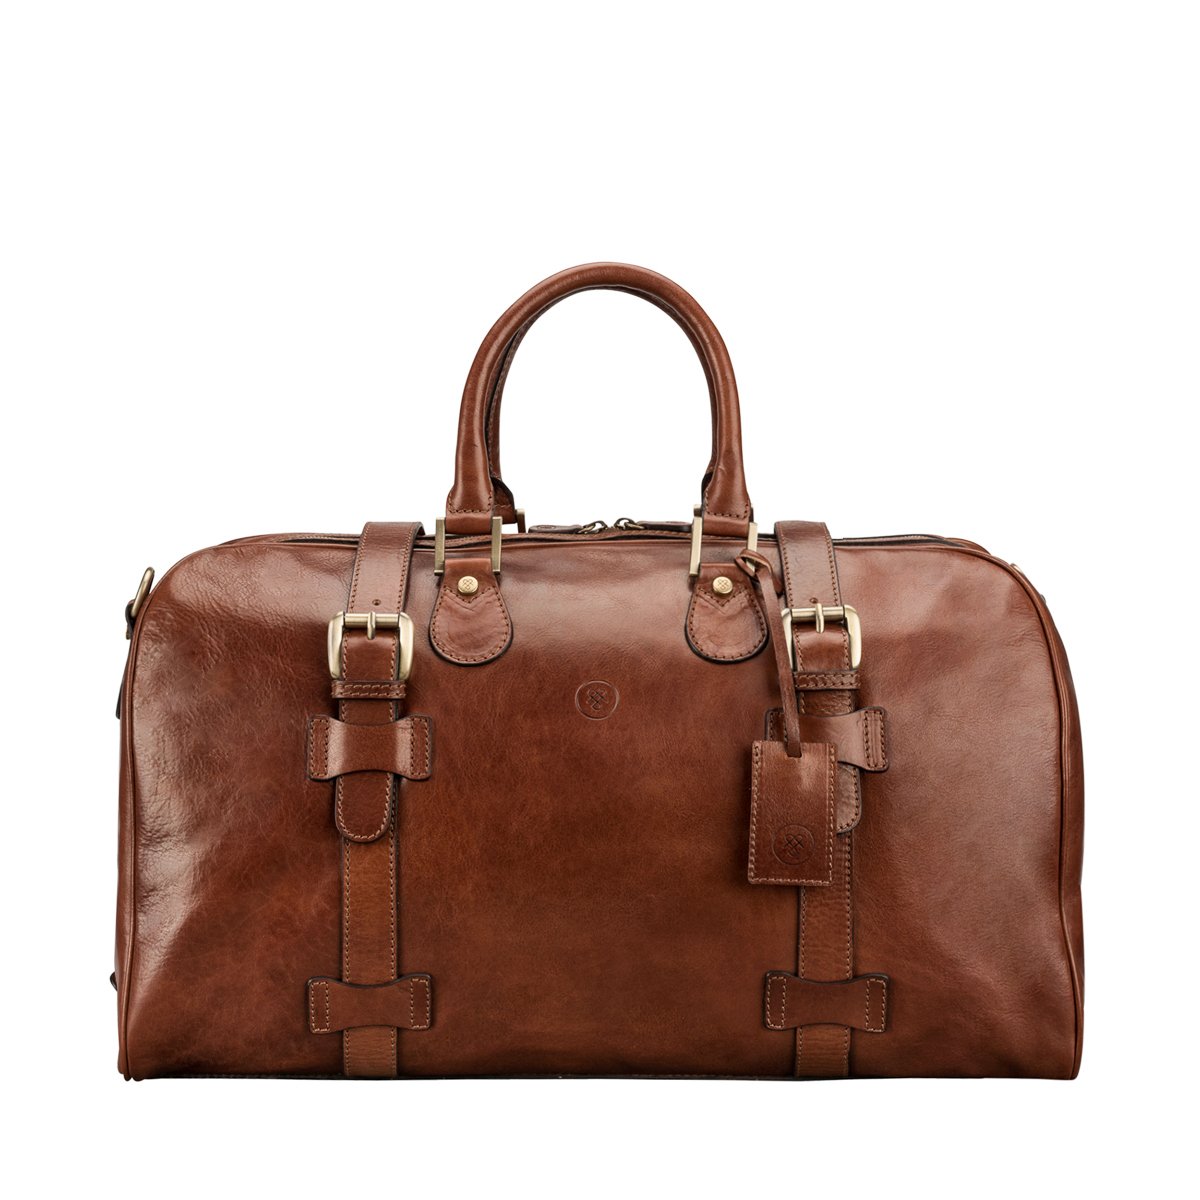 Maxwell Scott Bags - Tan Quality Italian Leather Overnight Bag